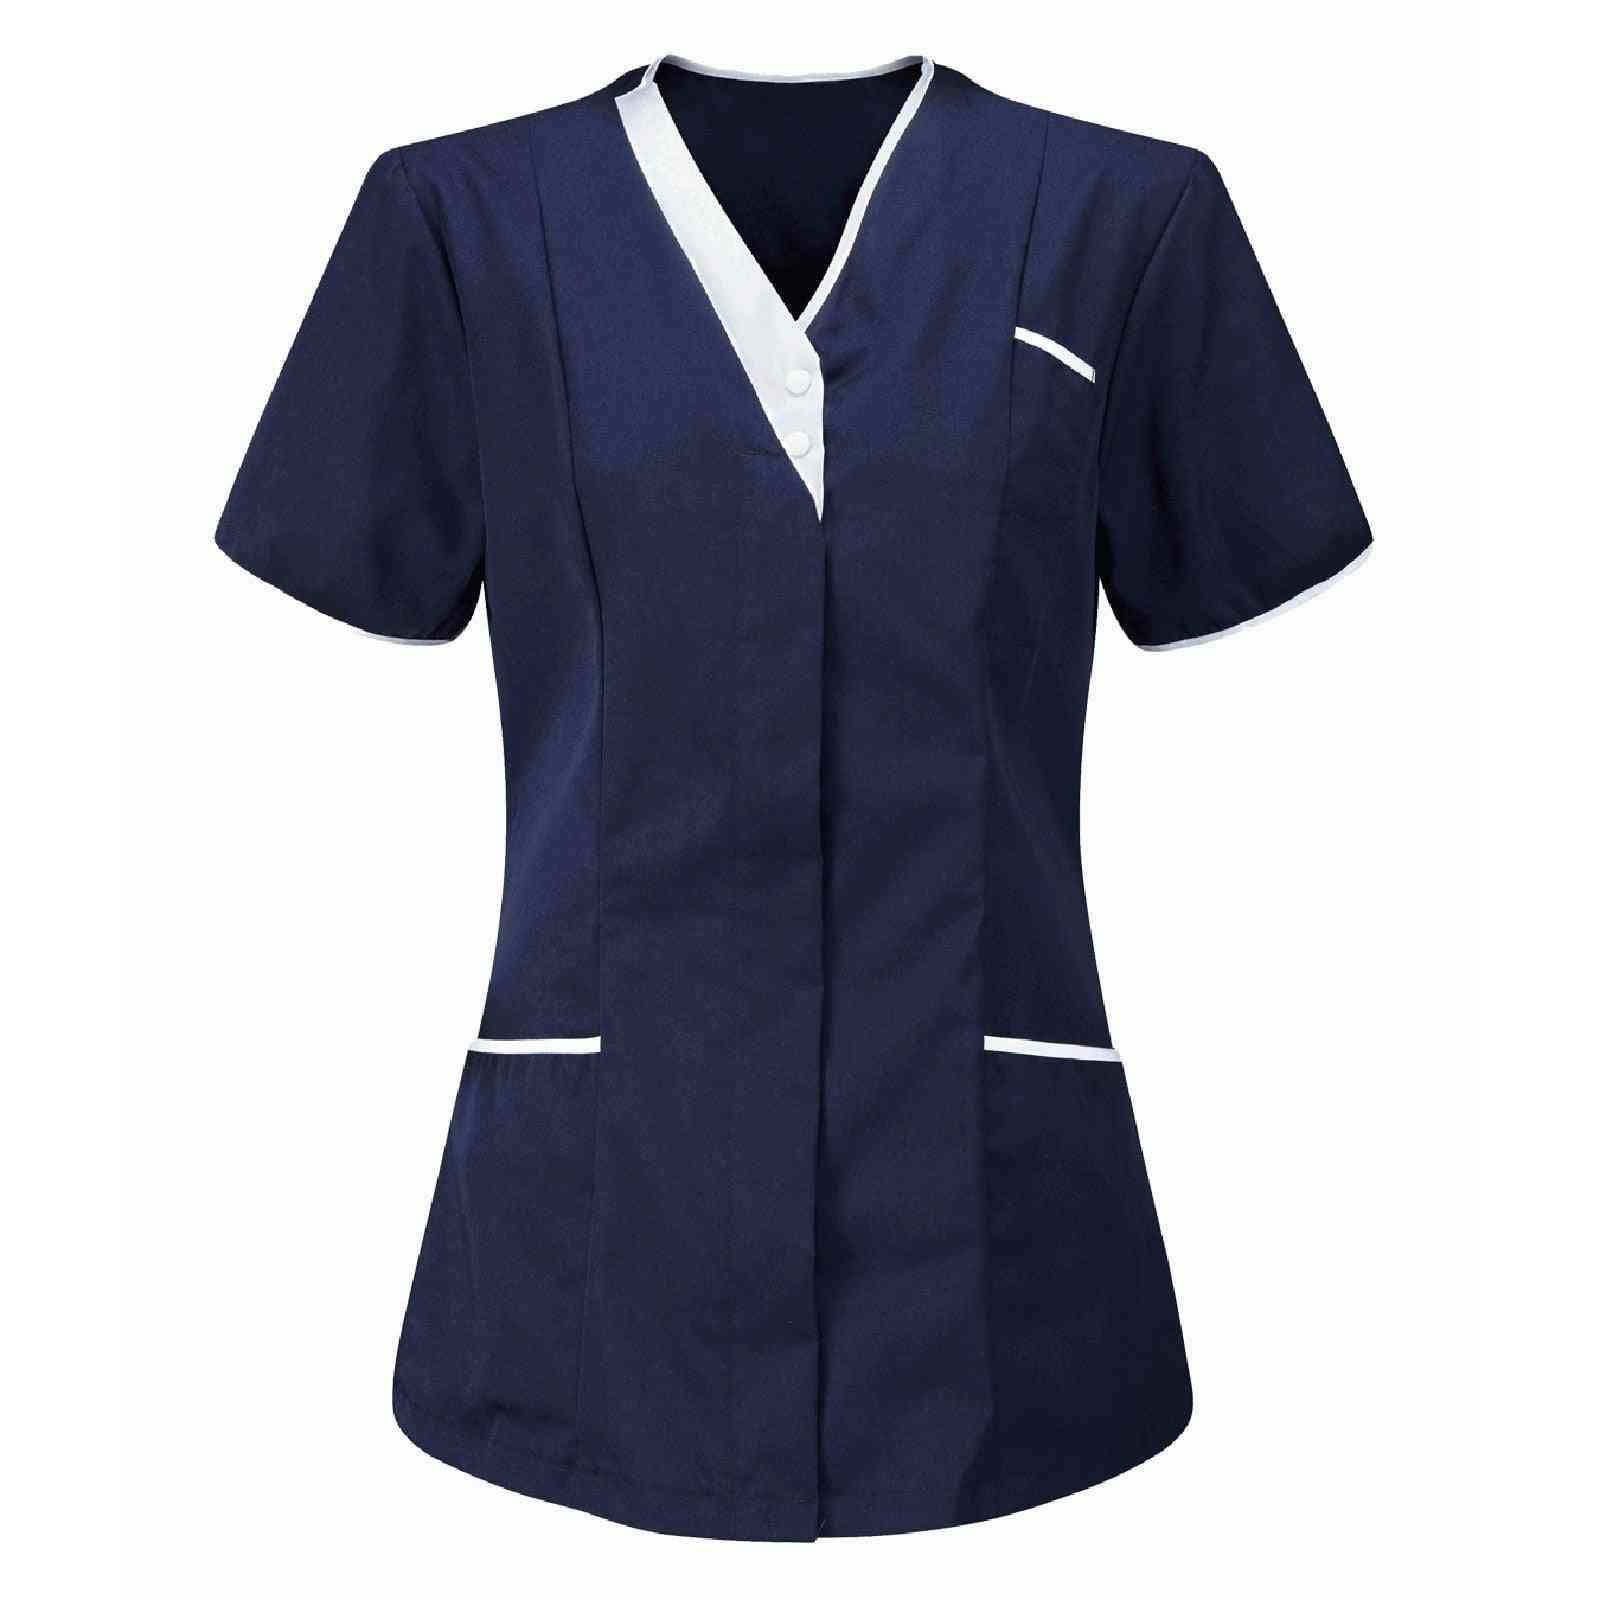 Women- Short Sleeves, Working Uniform V-neck, Blouse Top